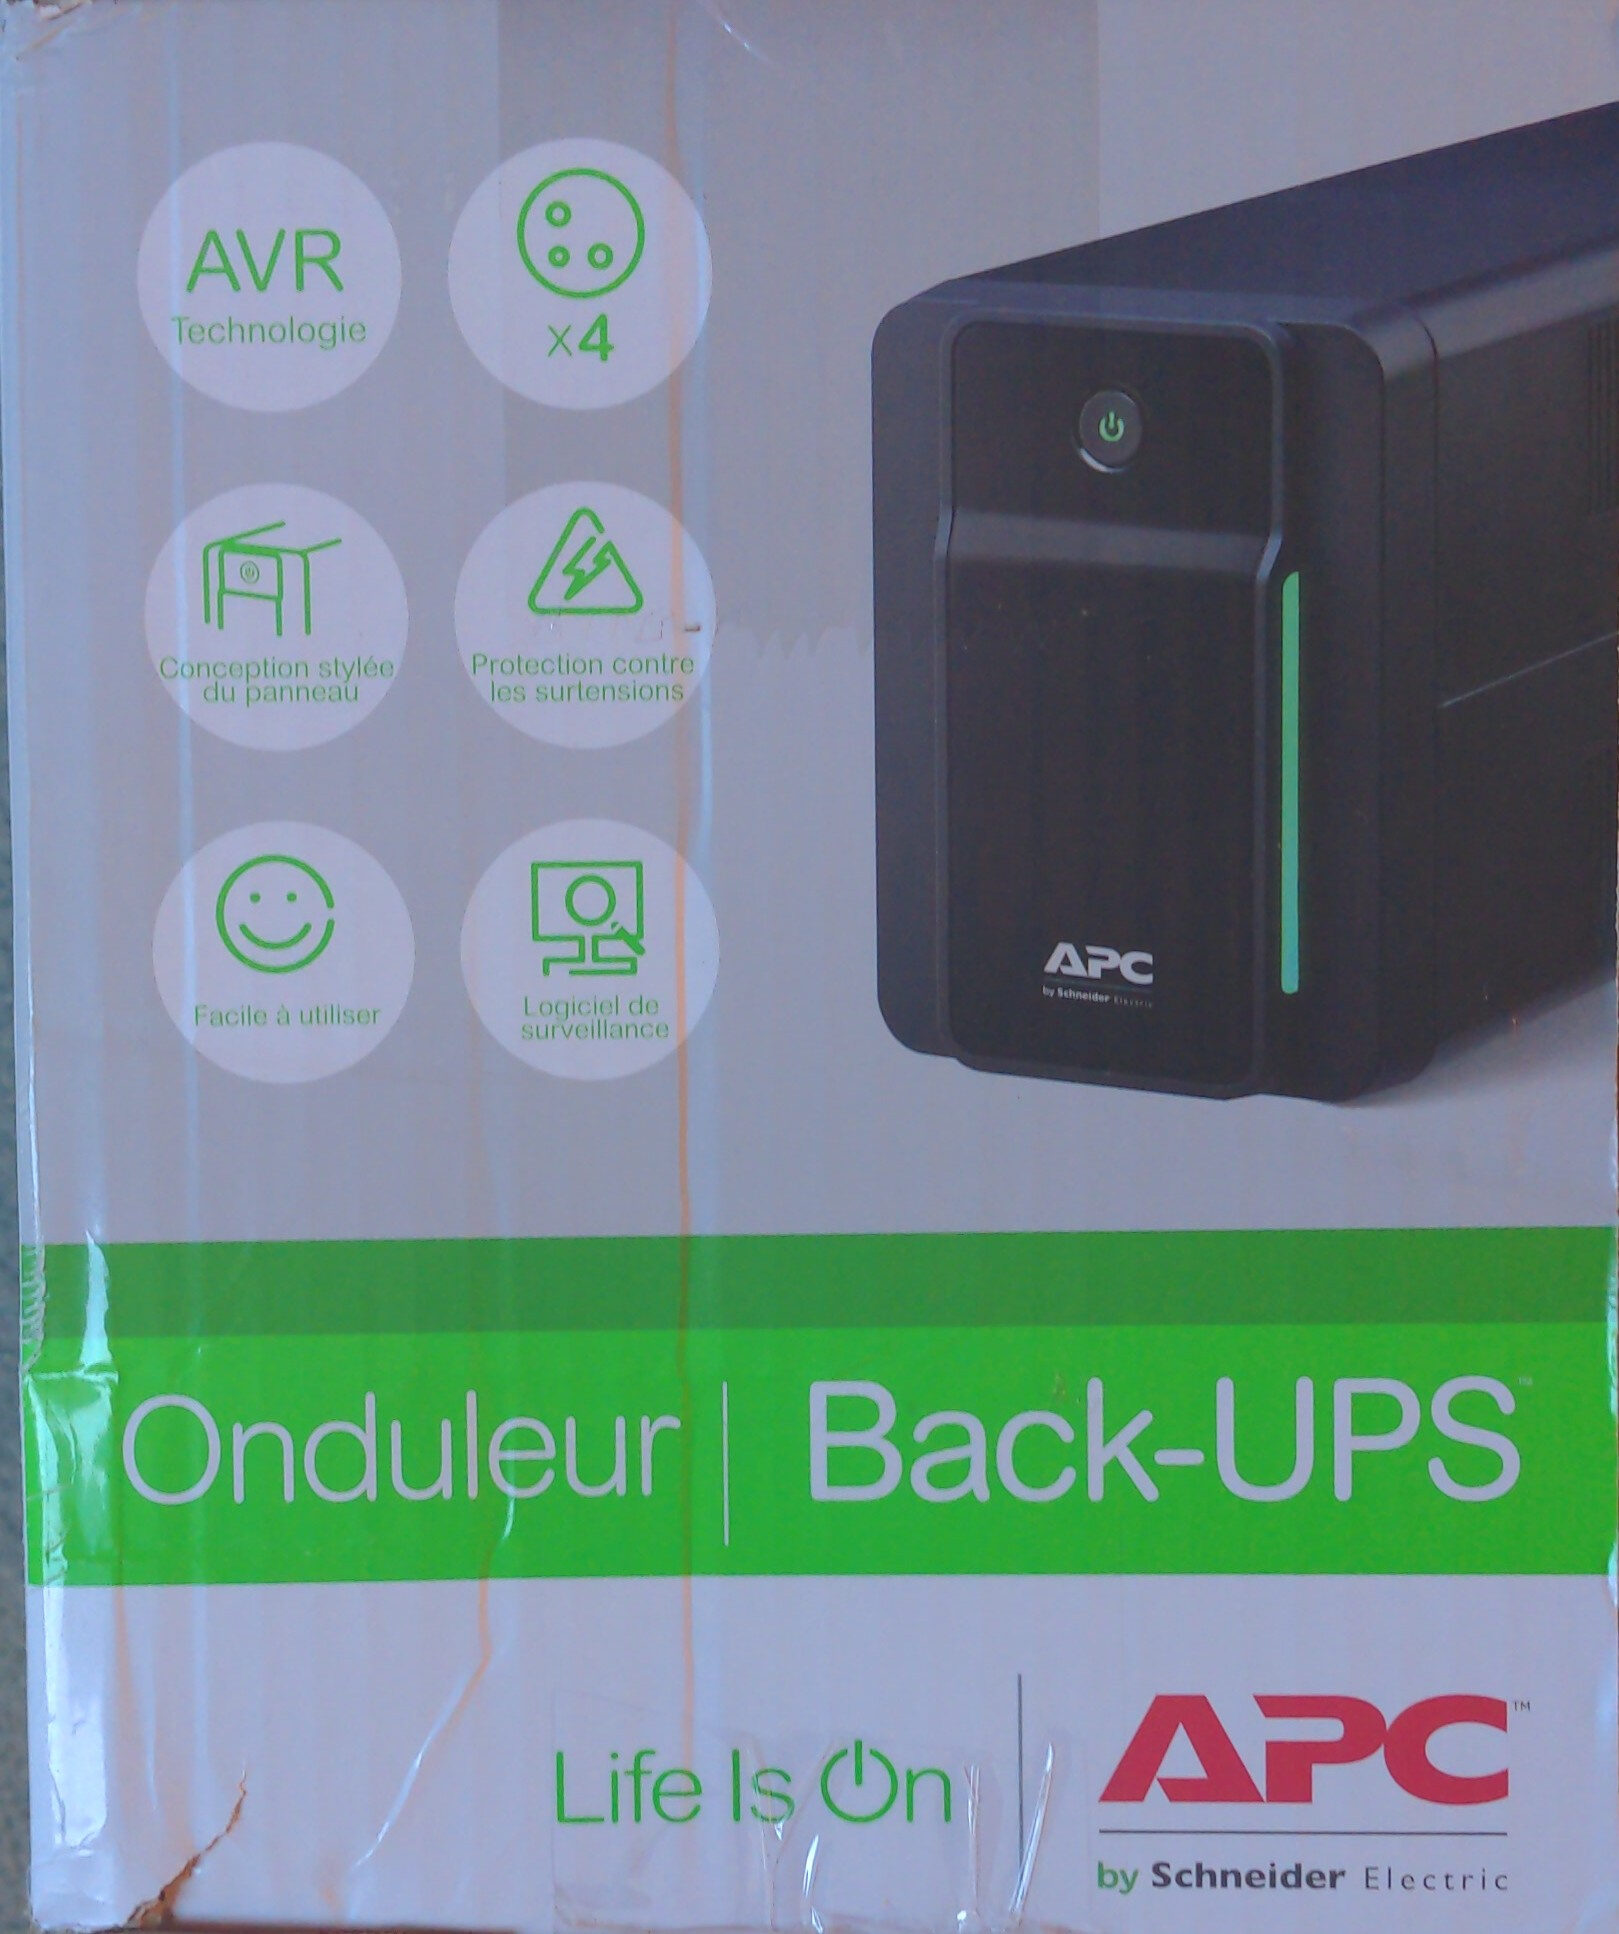 Onduleur Back-UPS BX950MI-FR - Product - en